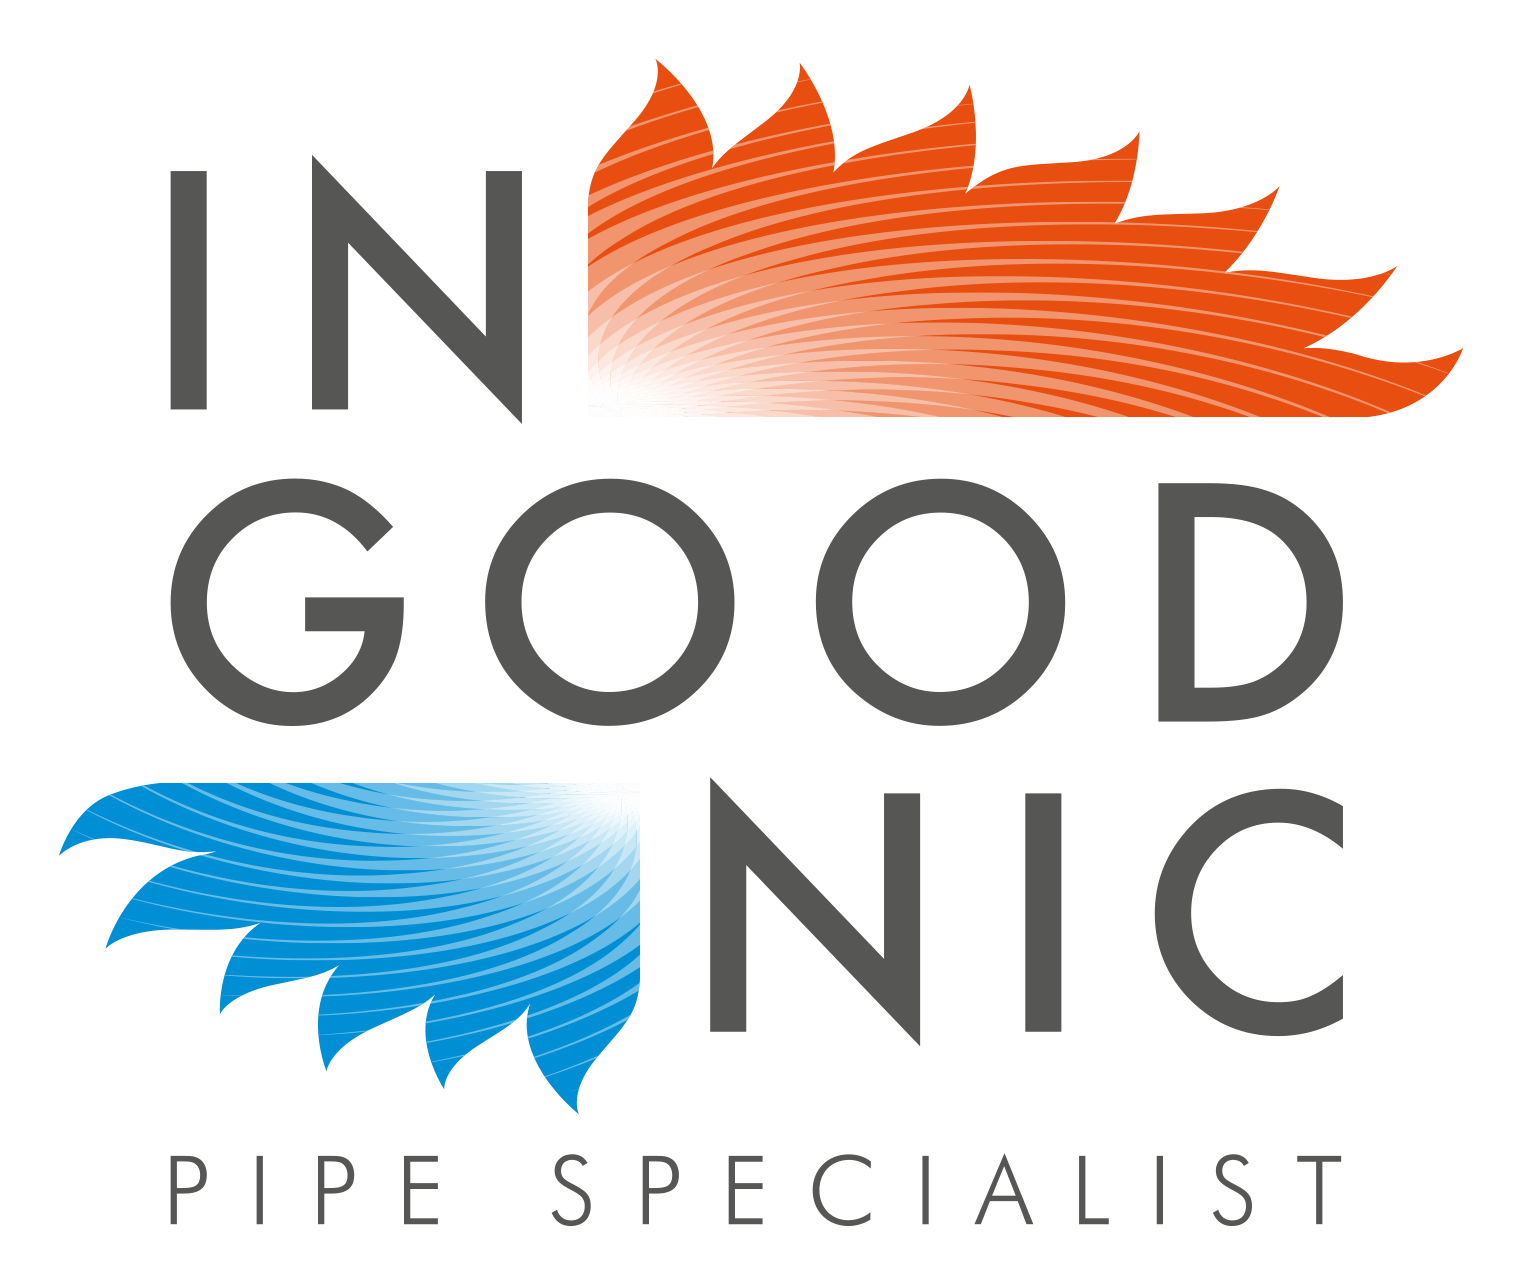 ingoodnic Ltd